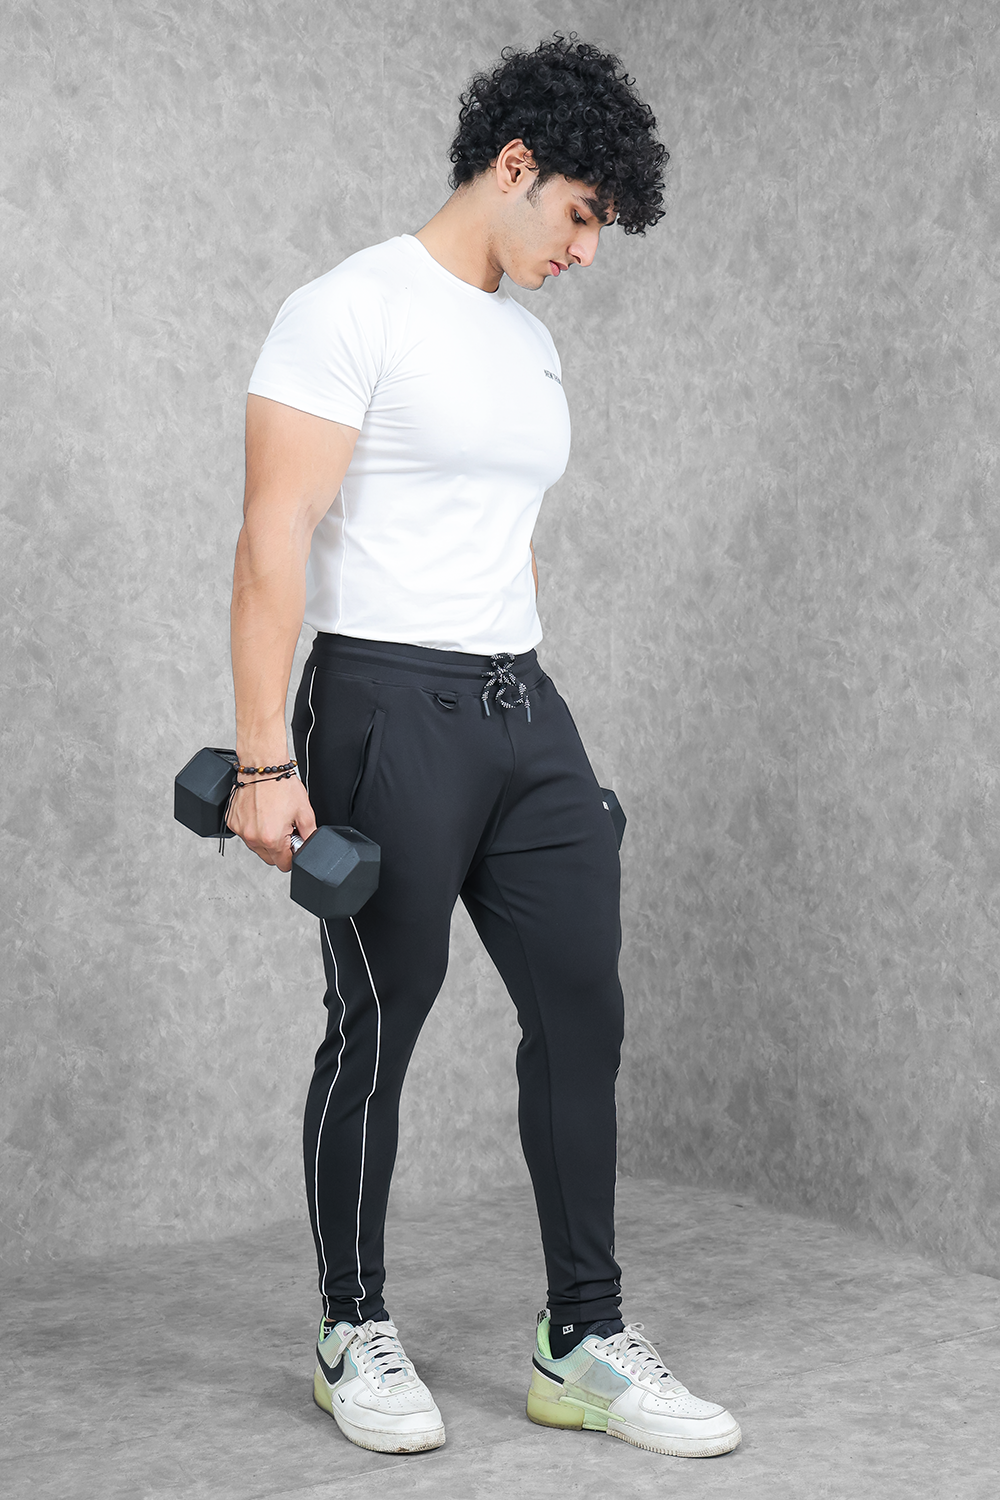 Mens Cotton Gym Trousers Sports BodyBuilding Pants Fitness Crossfit Jogging  Workout Training Sweatpants Loose Trousers